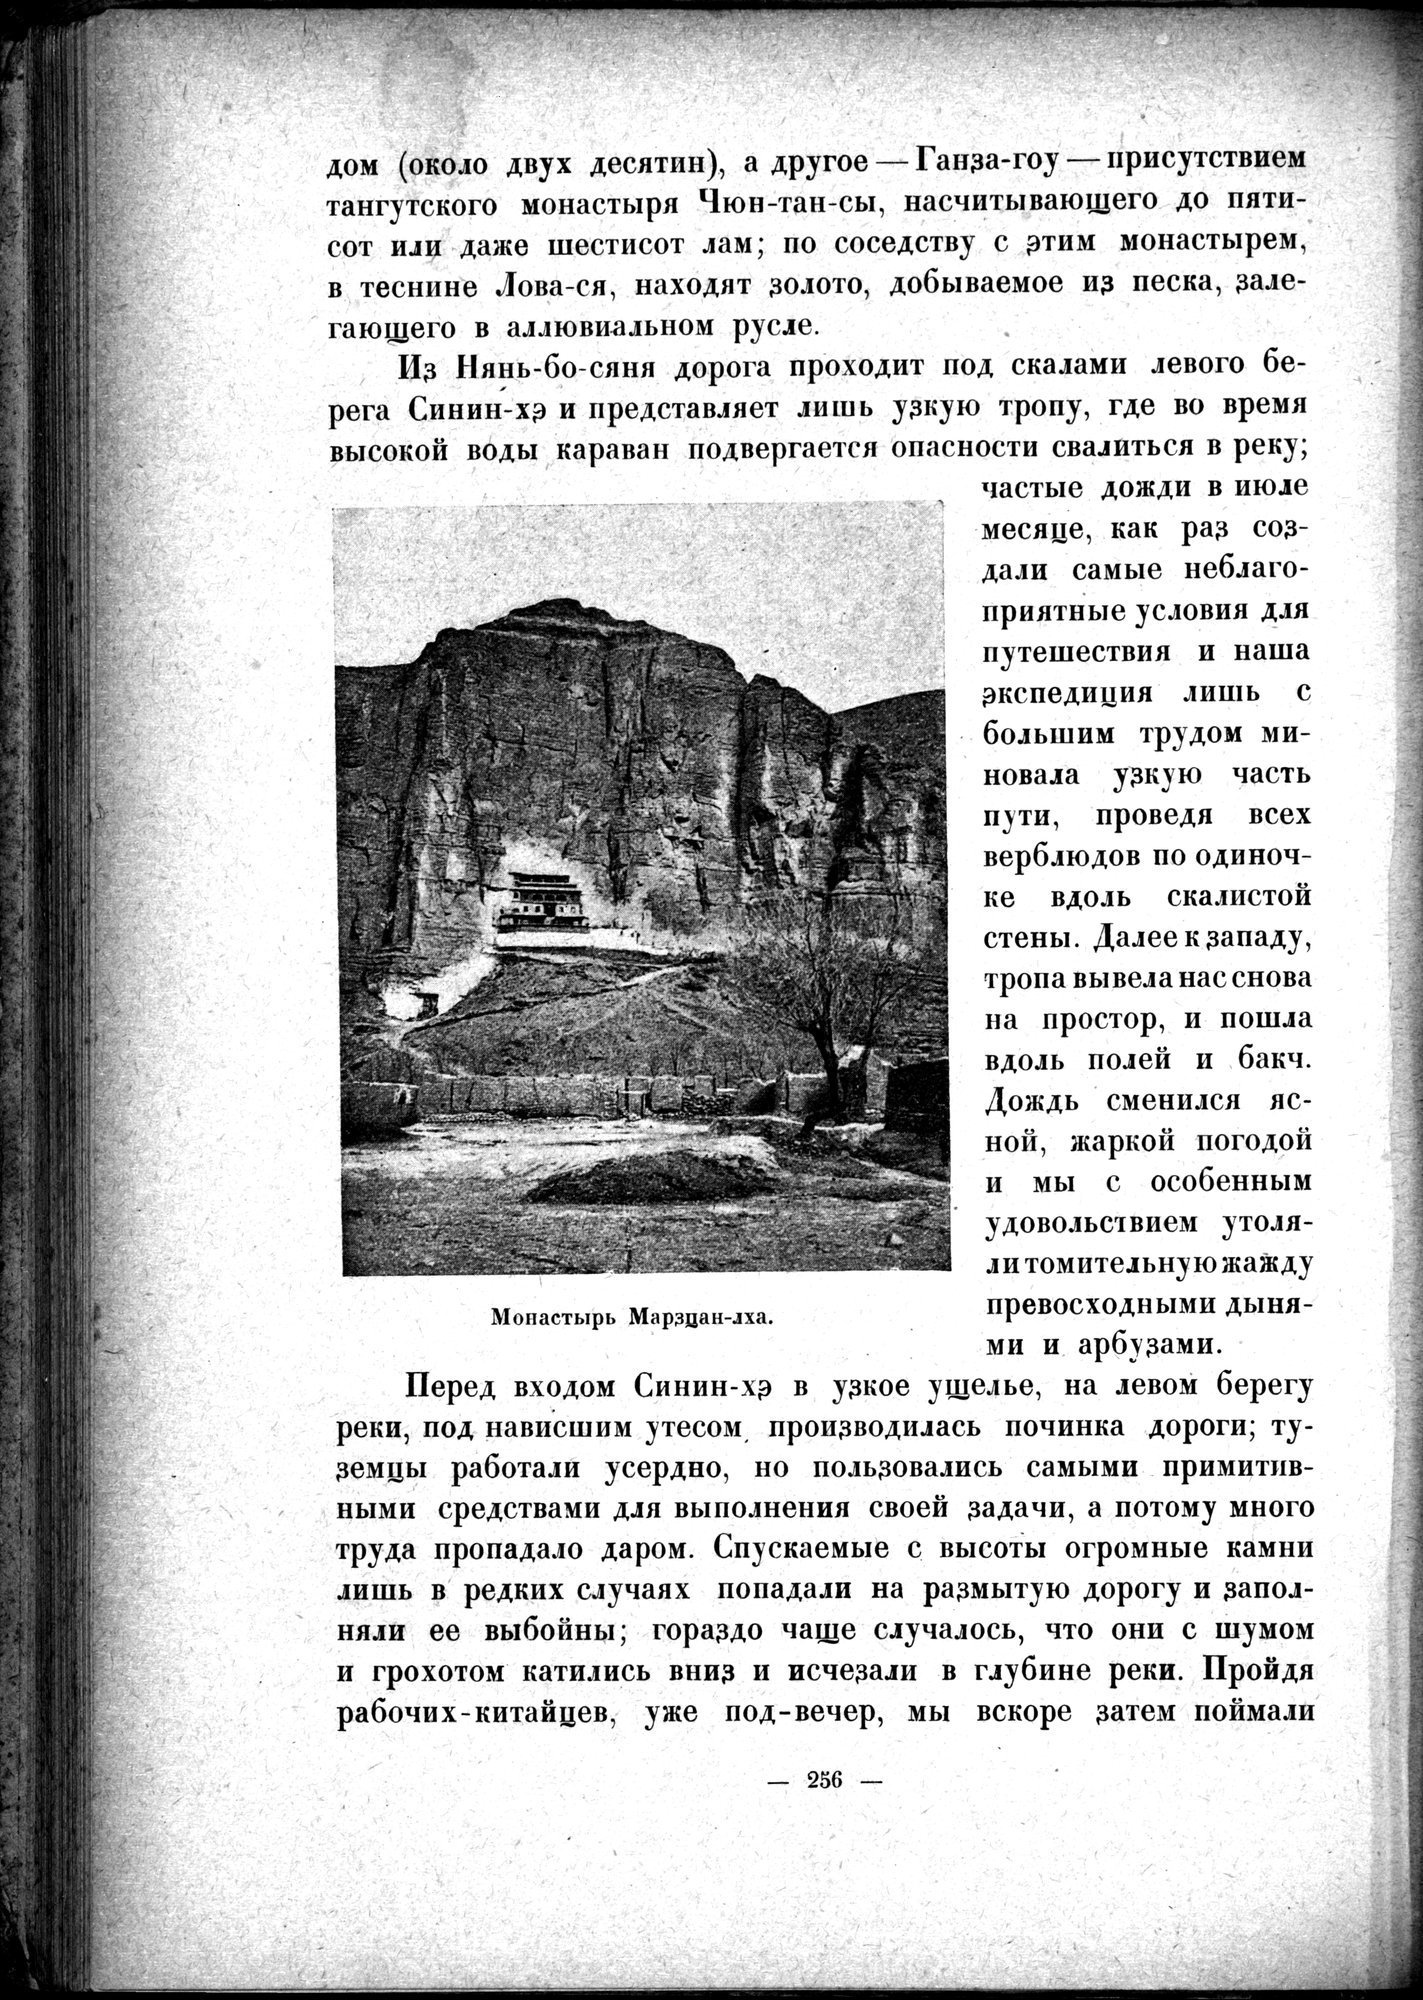 Mongoliya i Amdo i mertby gorod Khara-Khoto : vol.1 / Page 302 (Grayscale High Resolution Image)